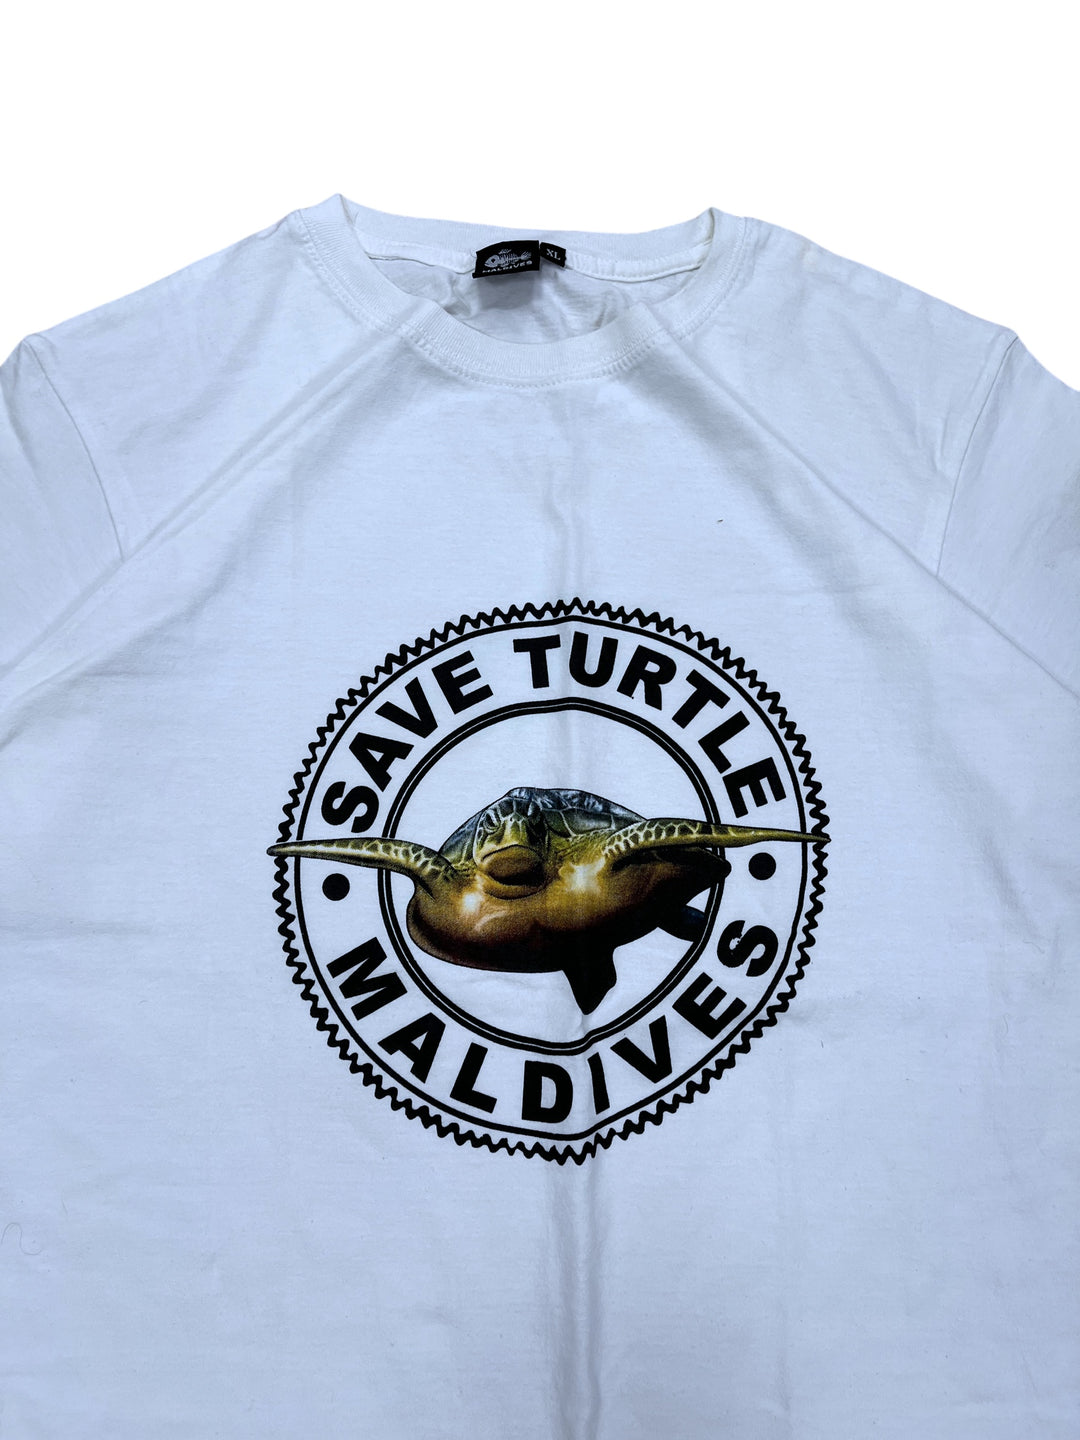 Save turtles Maldives Tshirt men’s Extra Large